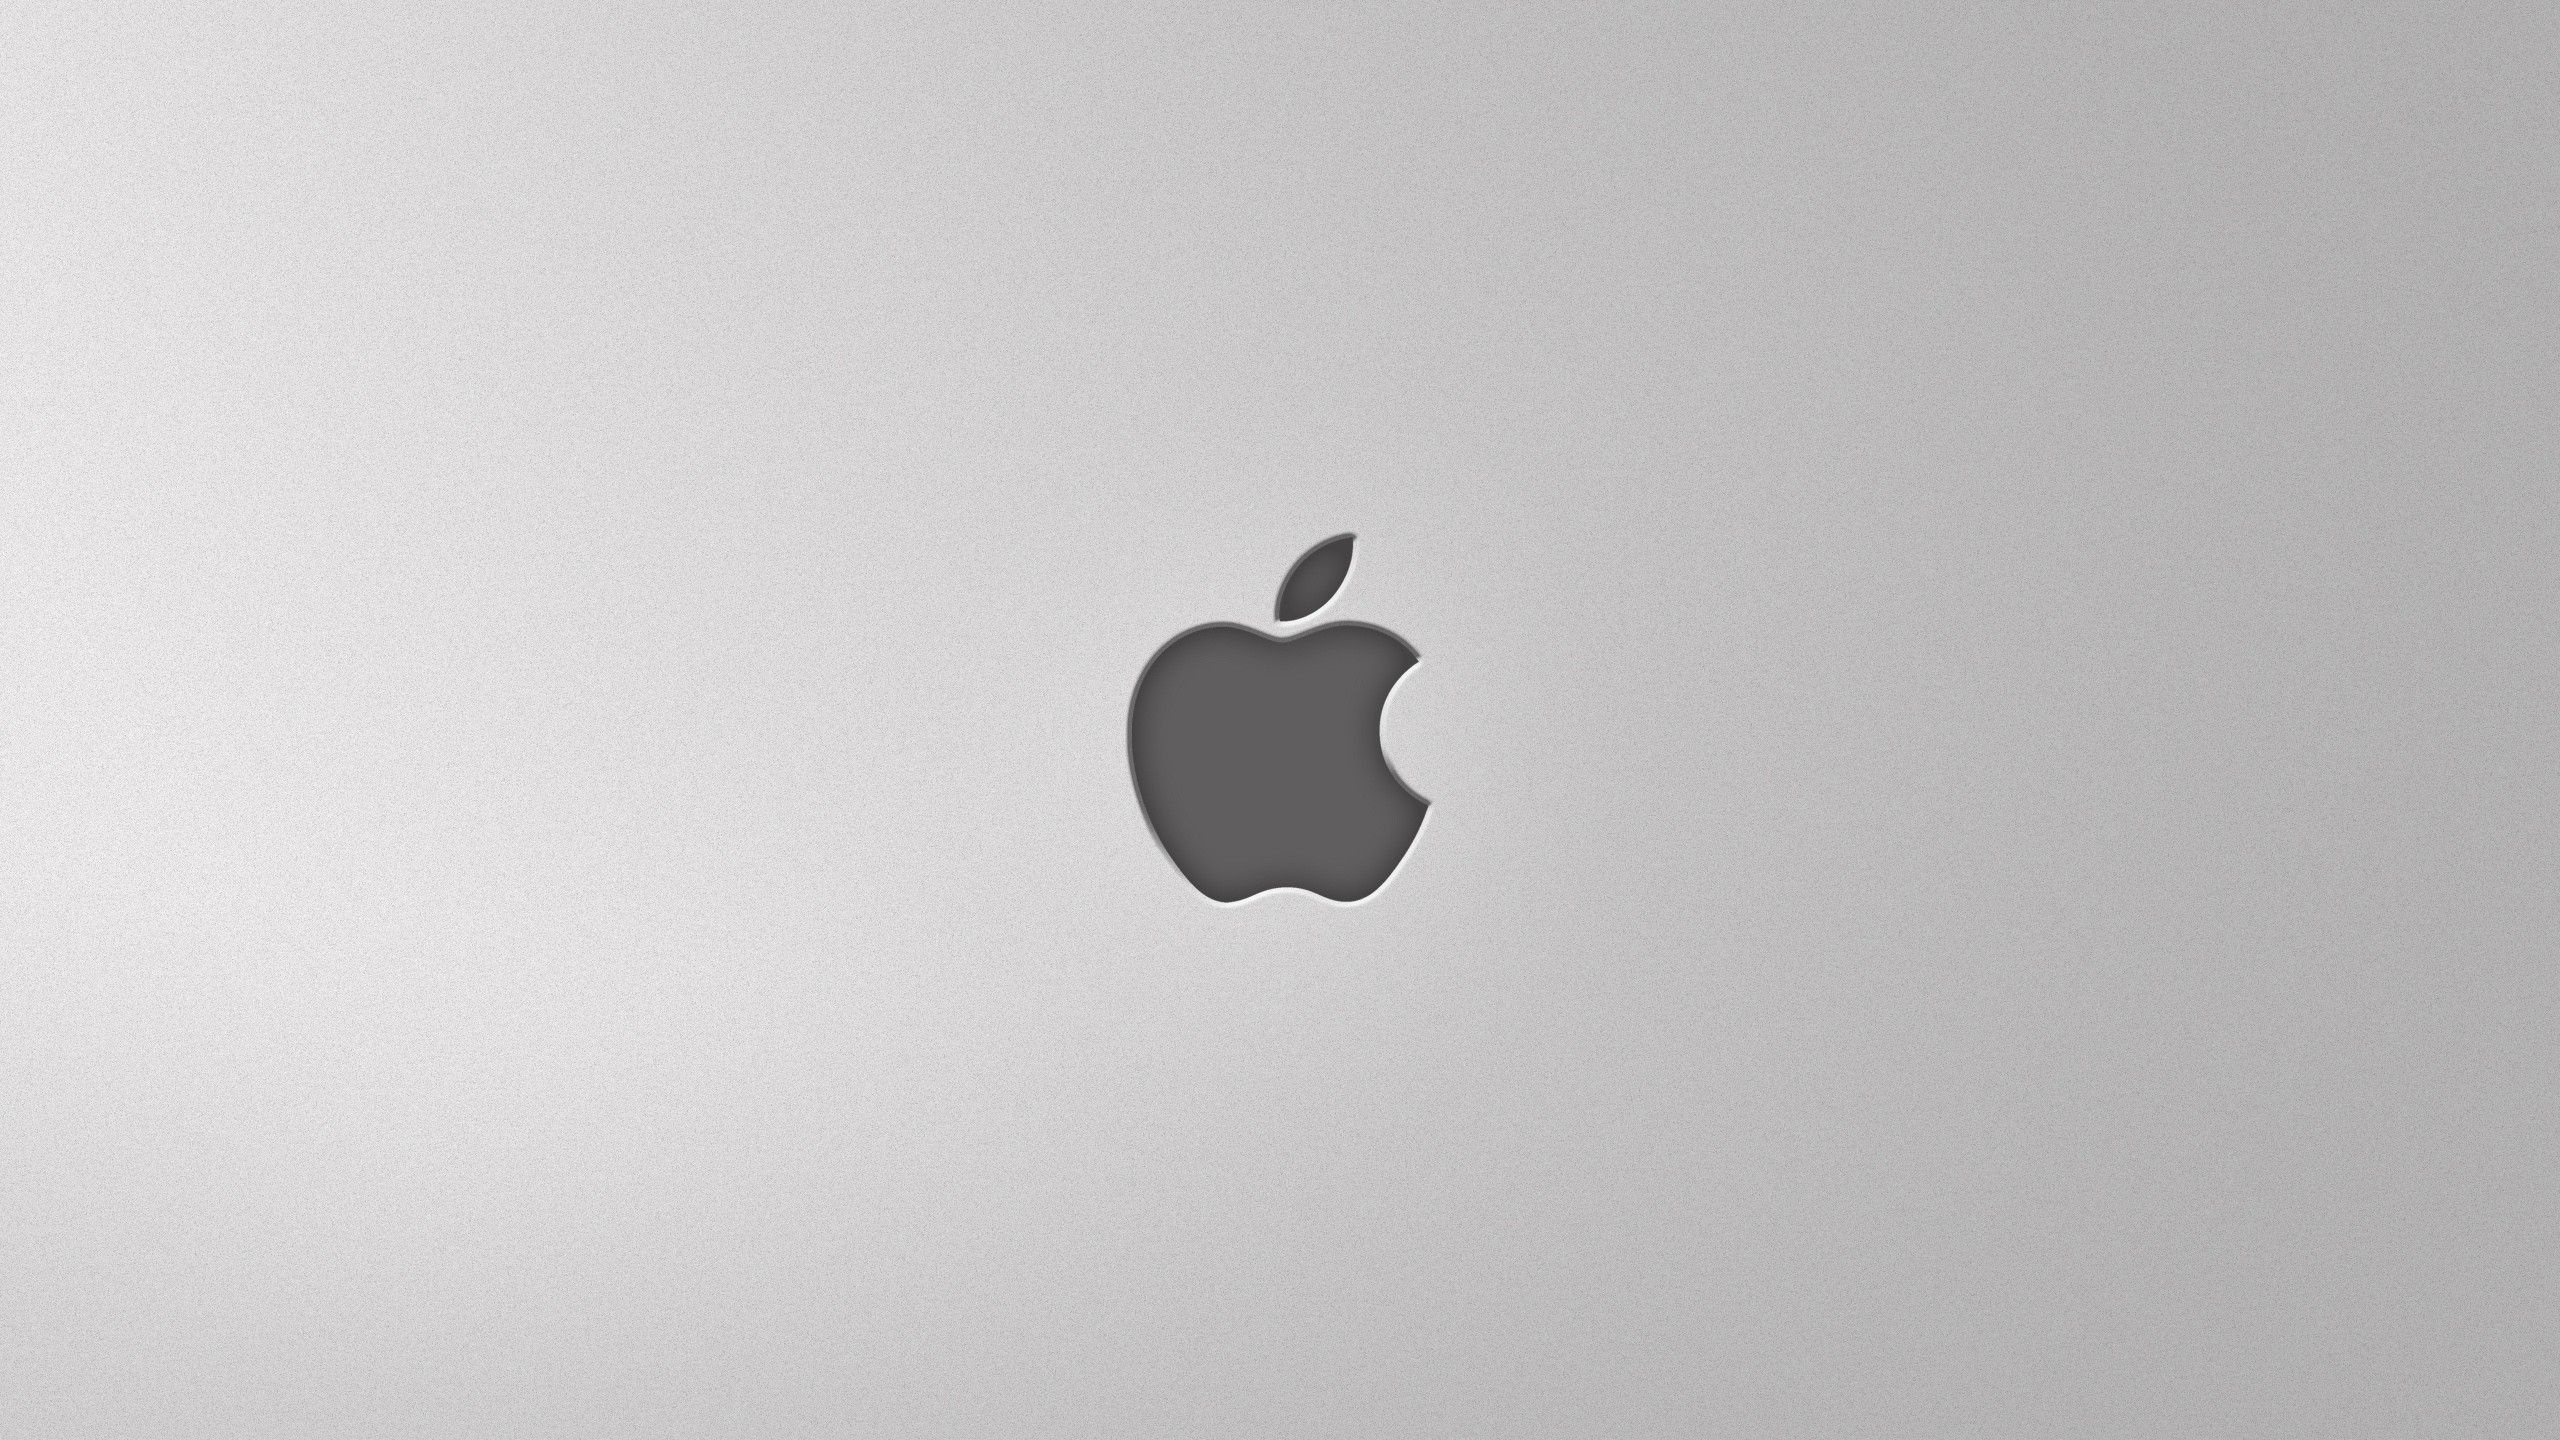 Apple logo, Iconic branding, Recognizable symbol, Mac aesthetics, 2560x1440 HD Desktop